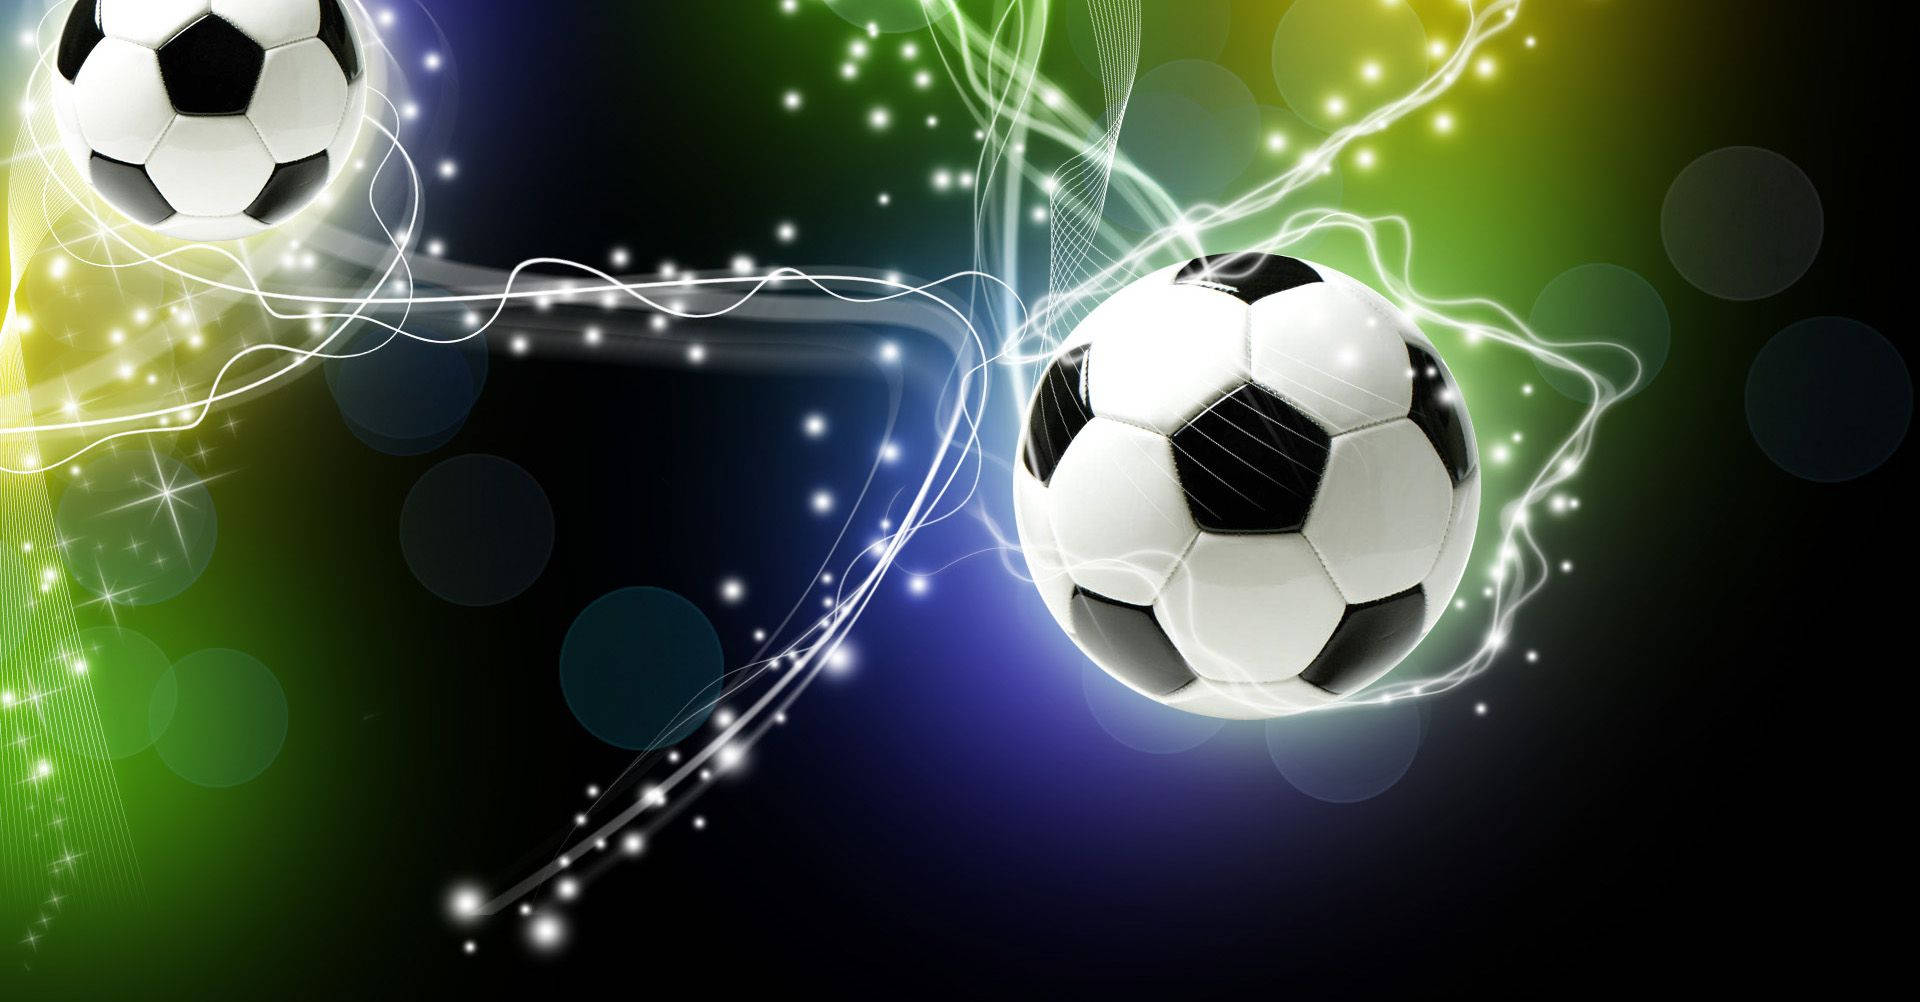 Cool Soccer Balls Fantasy Design Wallpaper